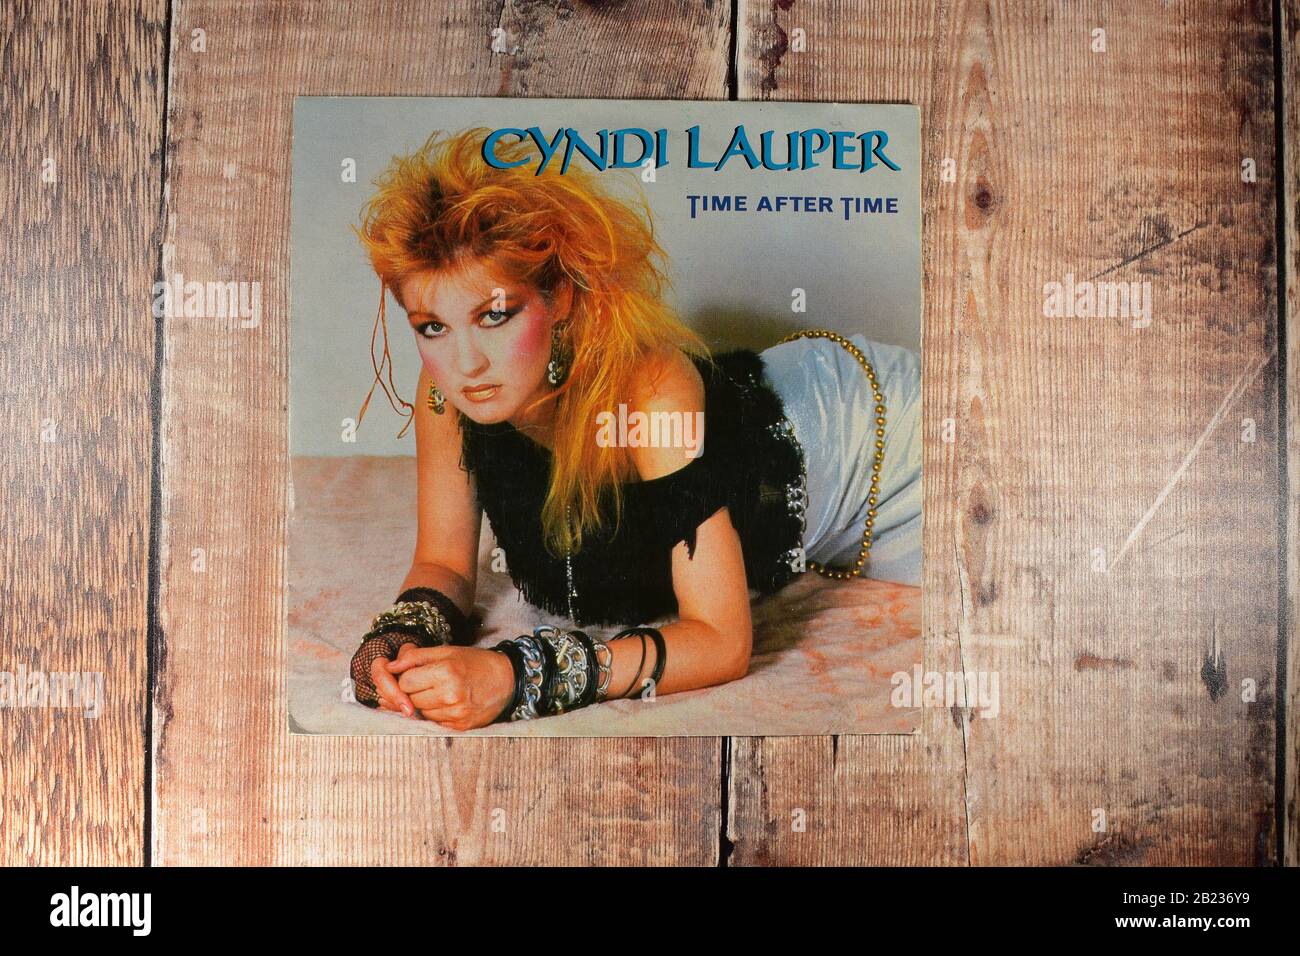 Cyndi Lauper - Time after time - 7 inch single Stock Photo - Alamy